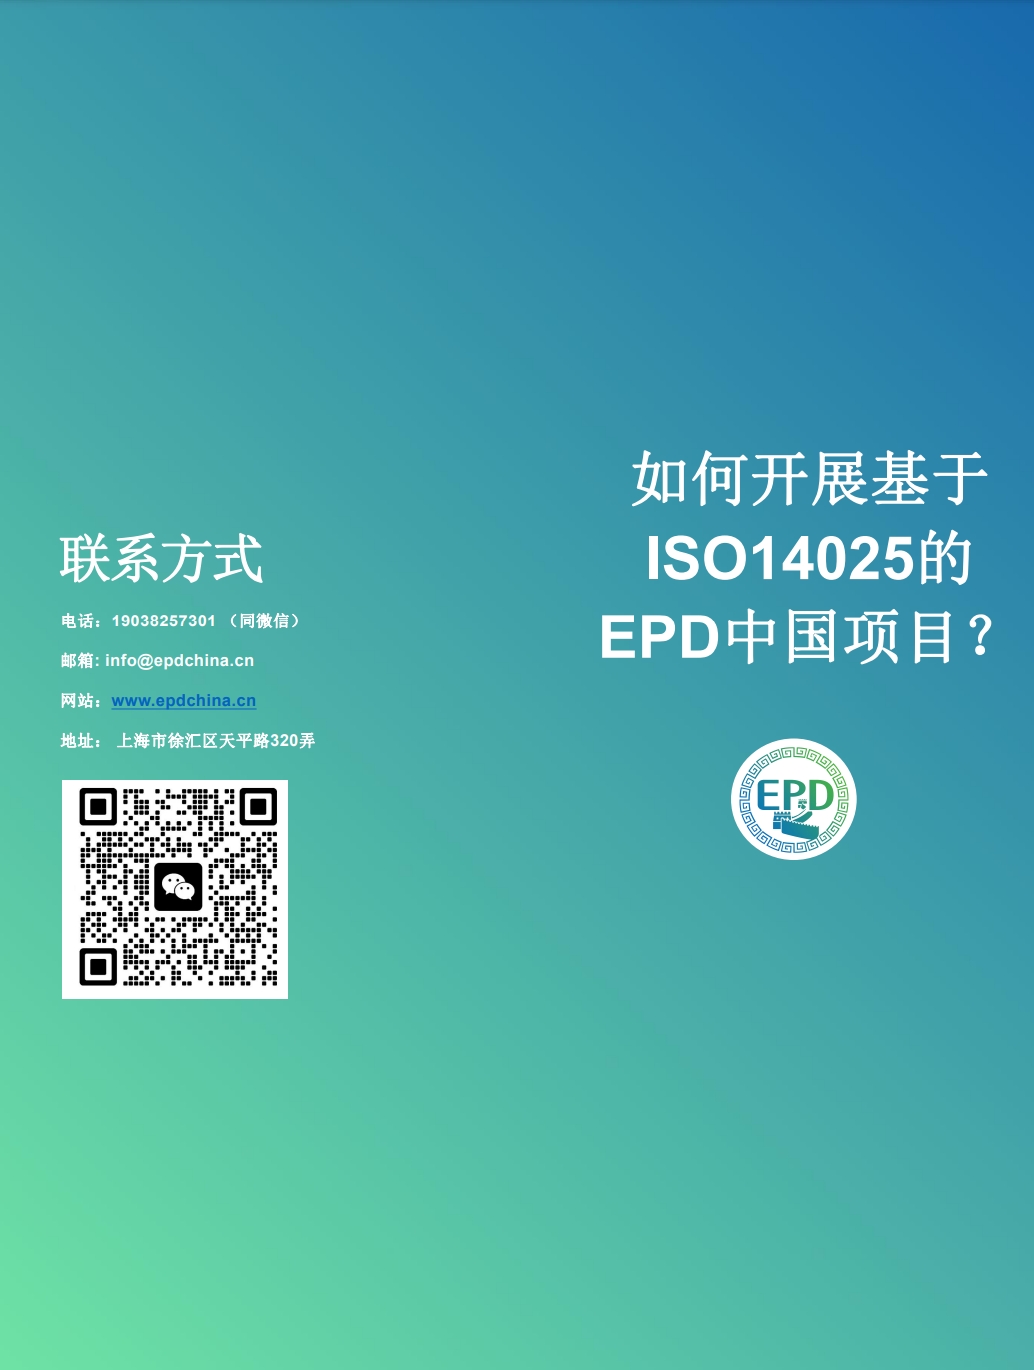 EPD中国项目宣传手册